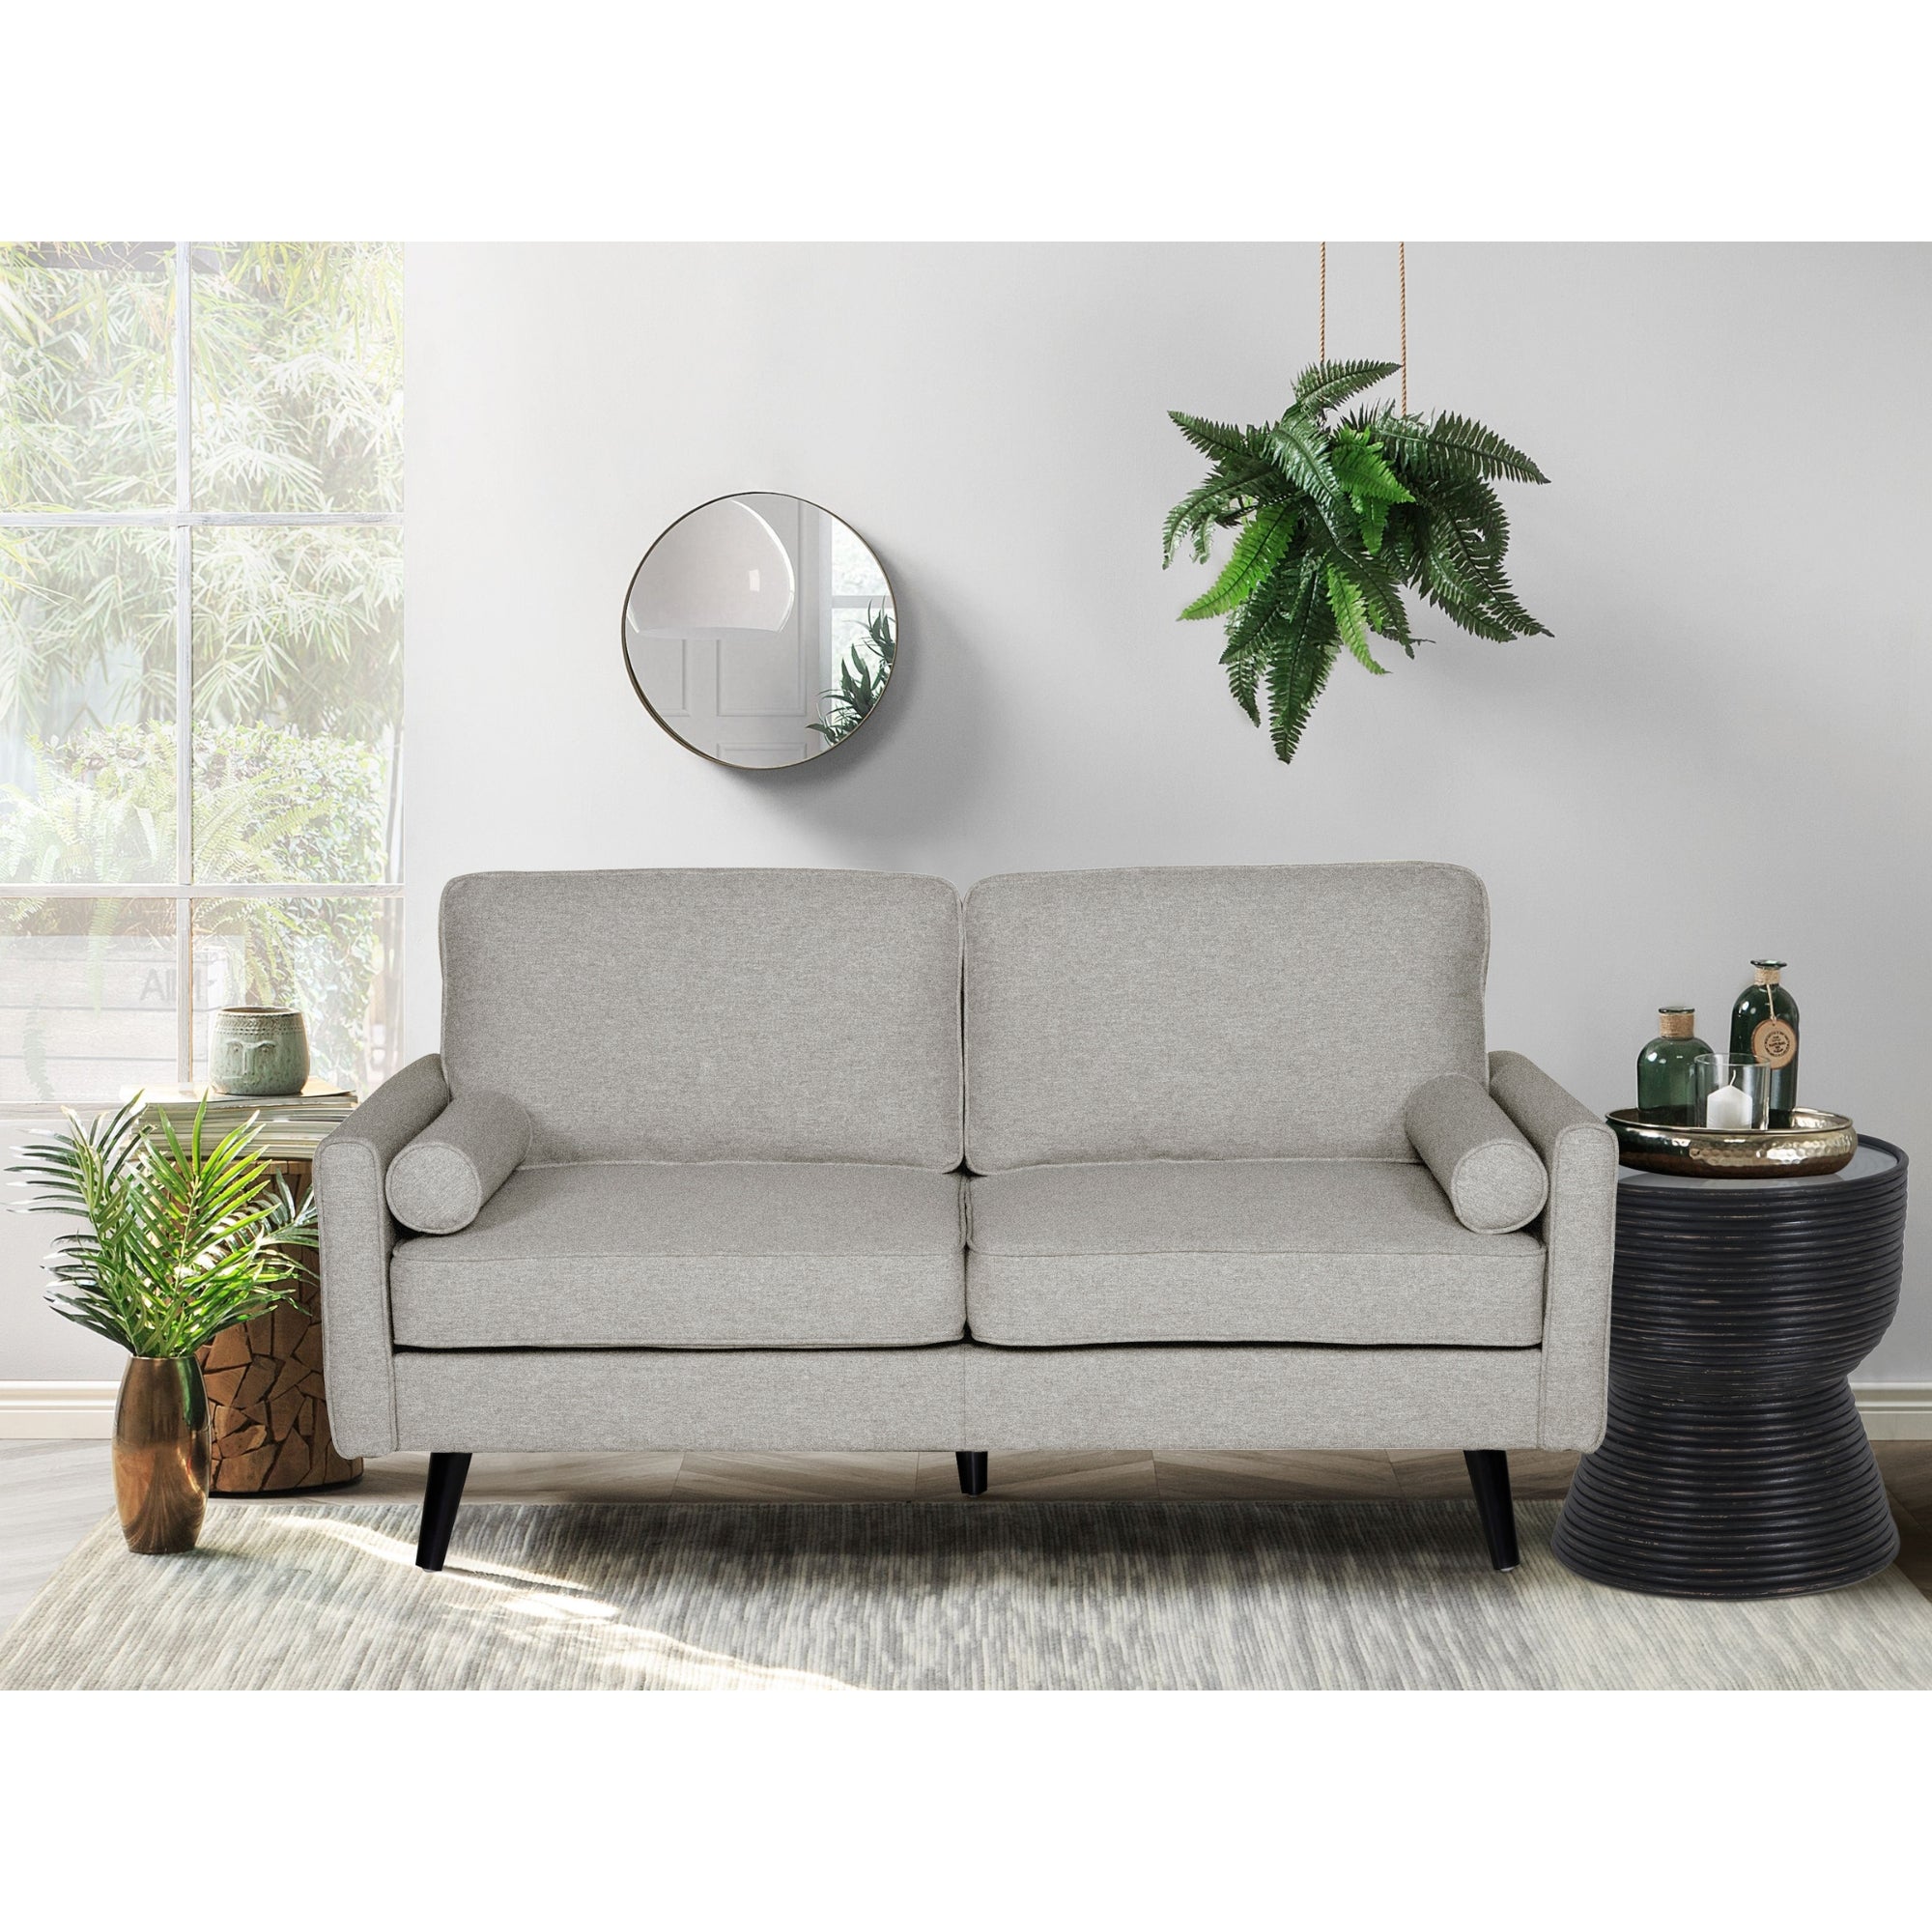 Stylish Light Grey 2 Seater Sofa, Scandinavian Design